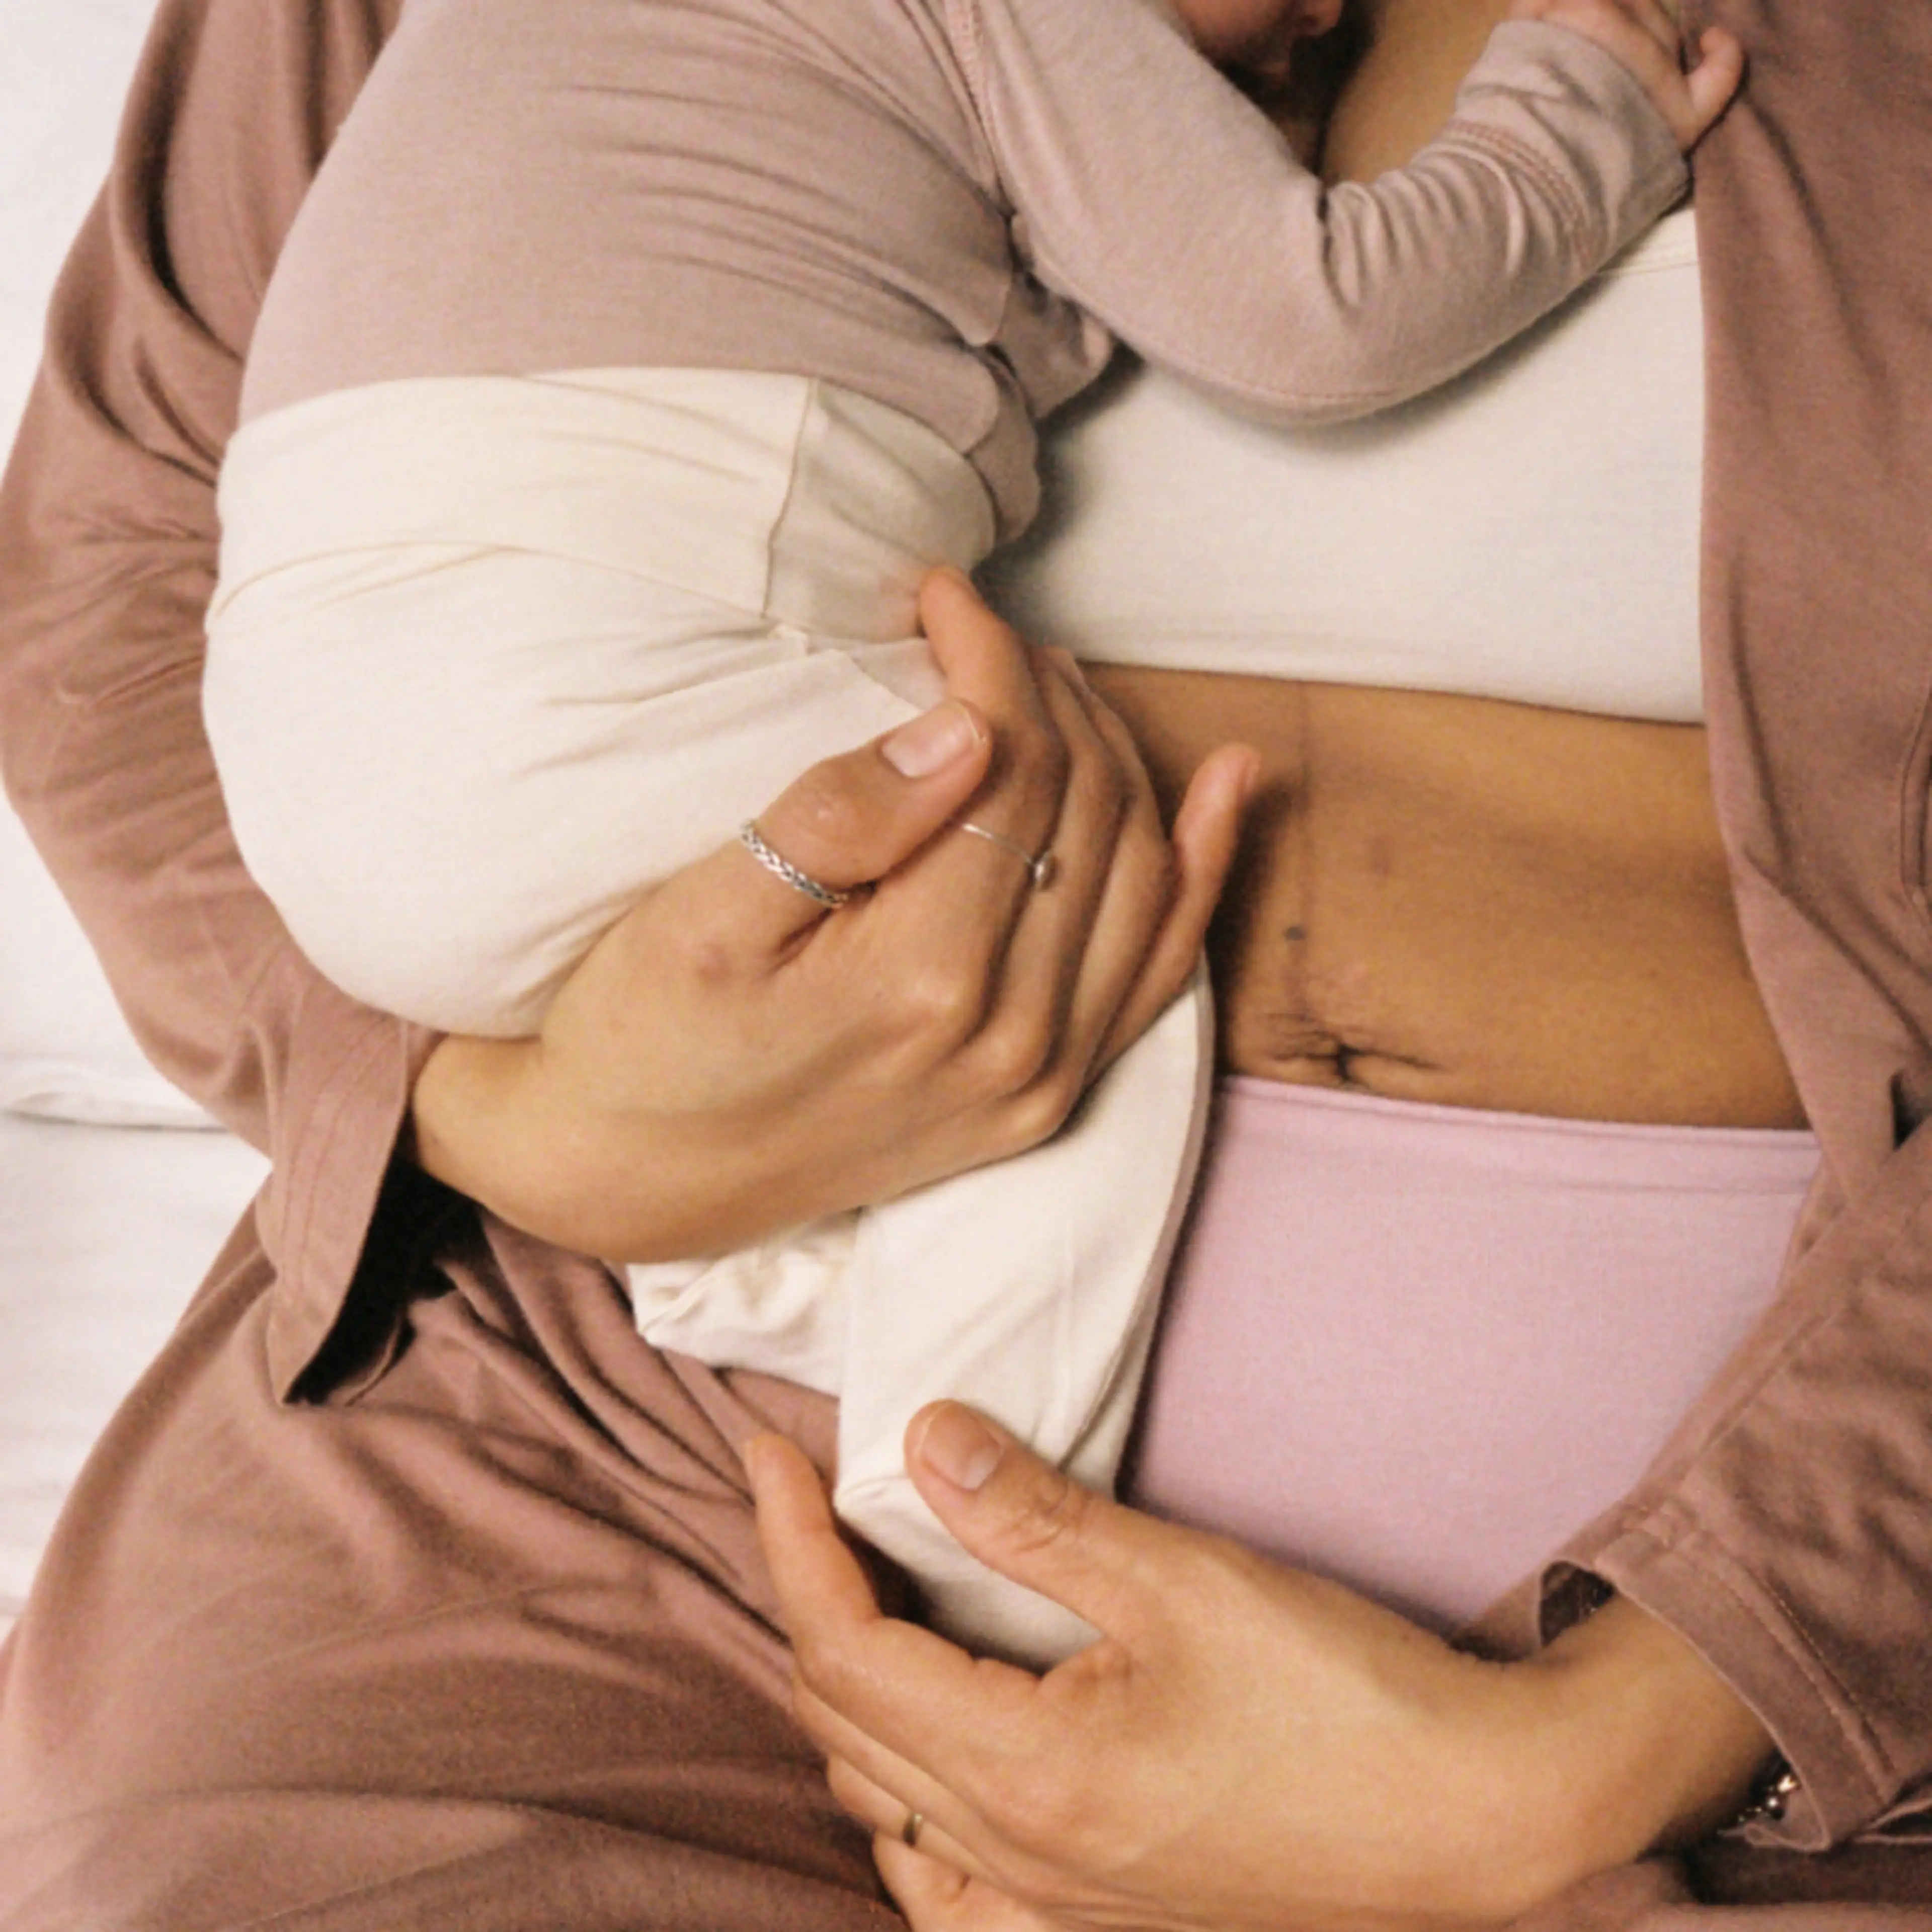 Postpartum Bleeding Is Normal. Here's How to Treat It